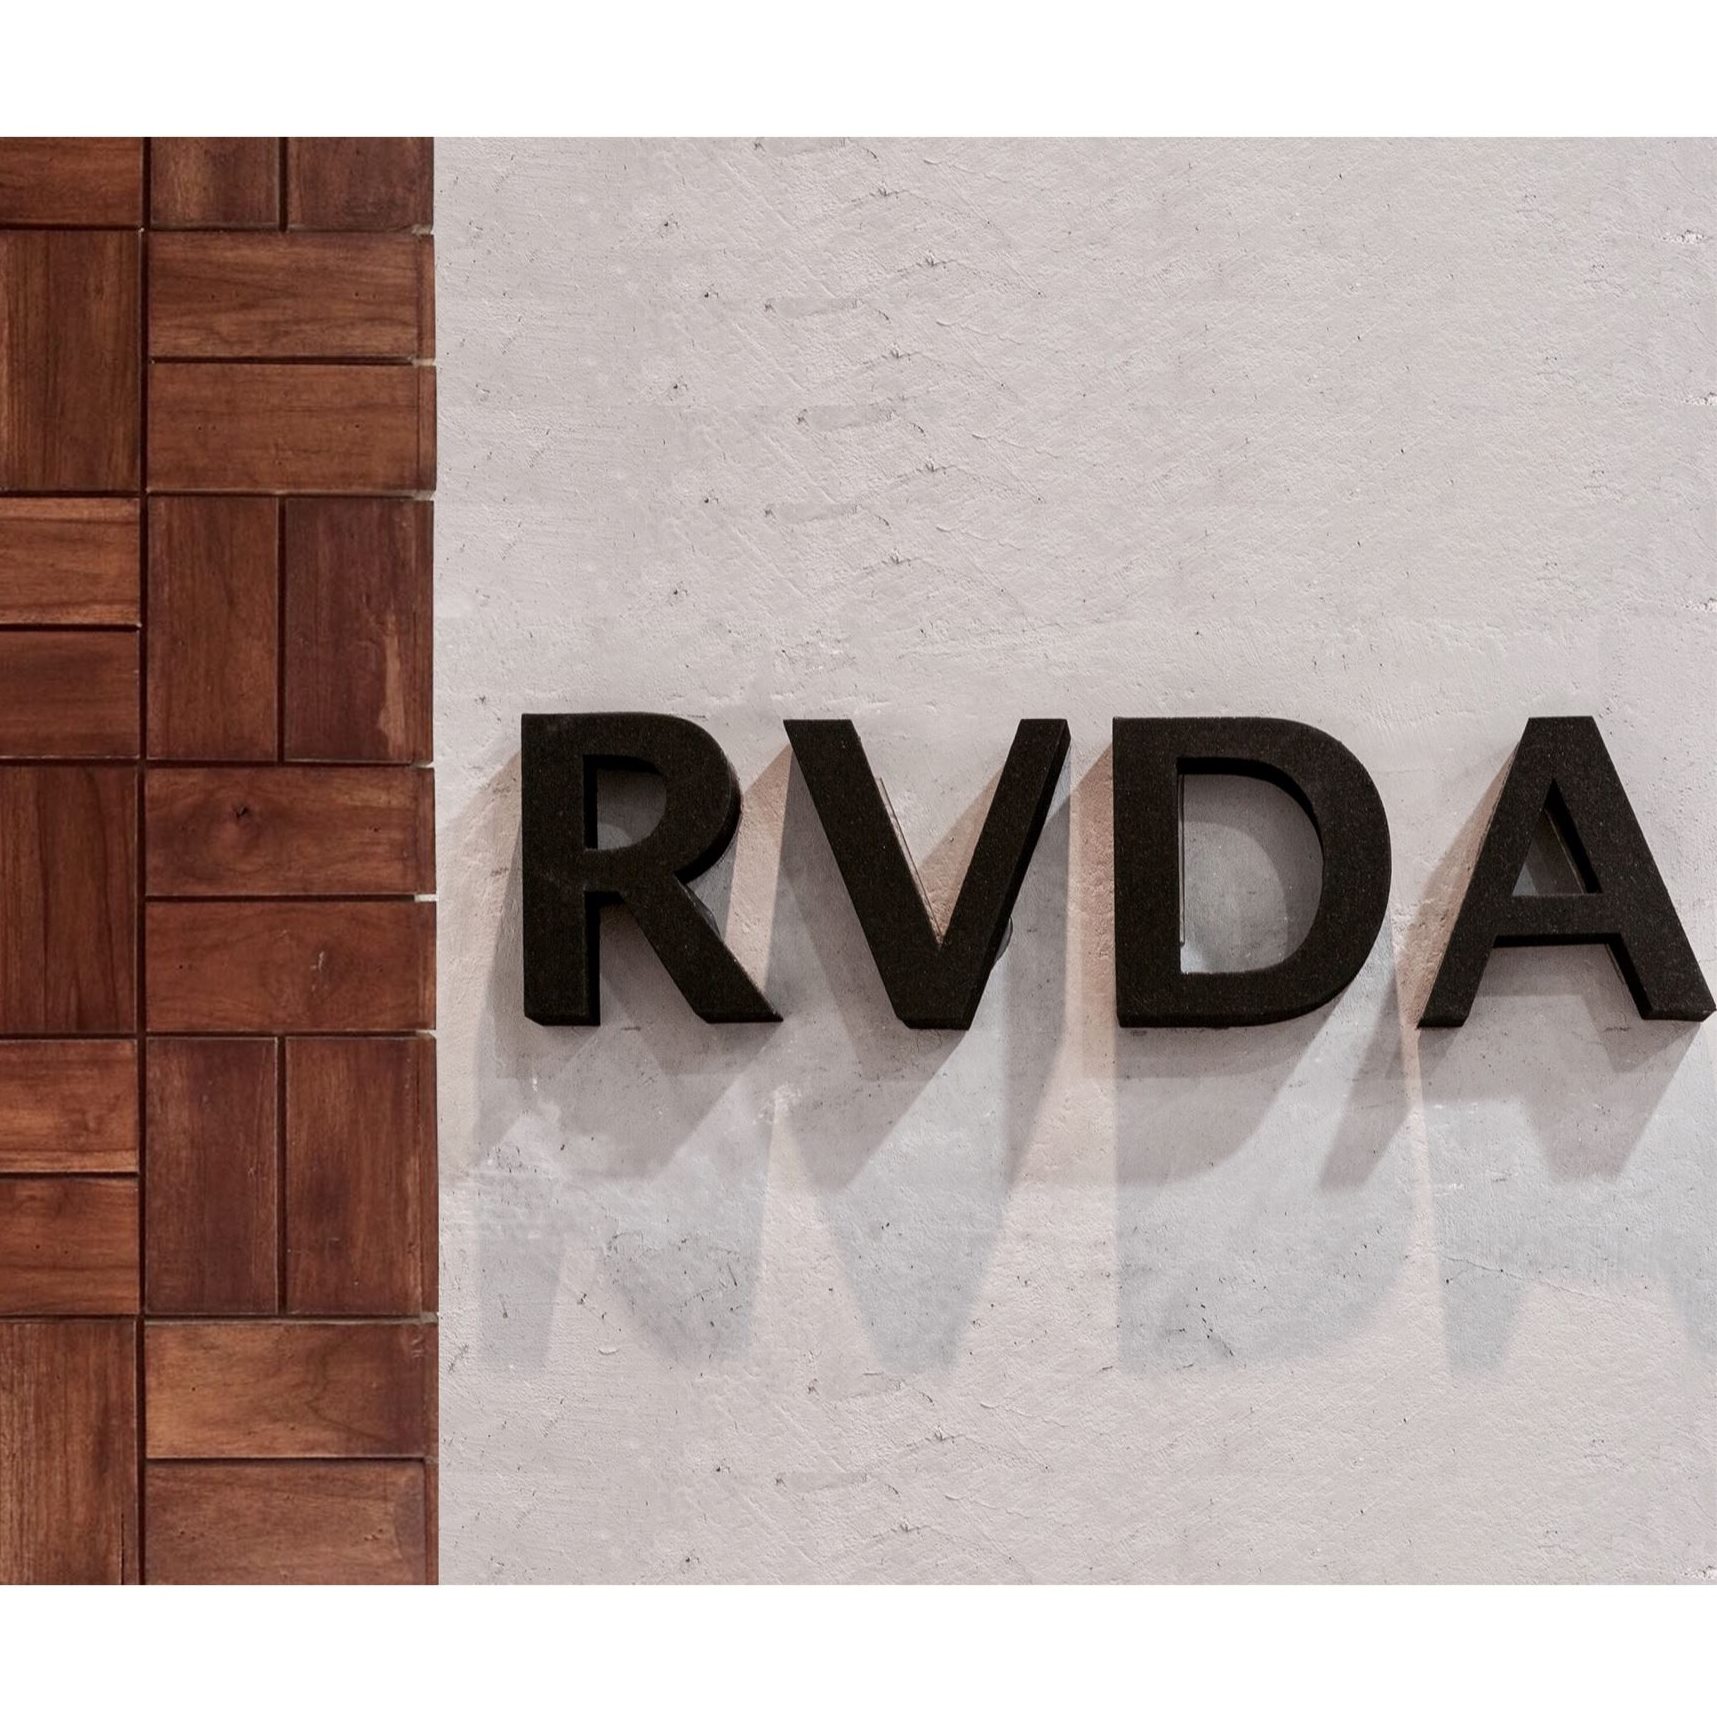 RVDA Logo